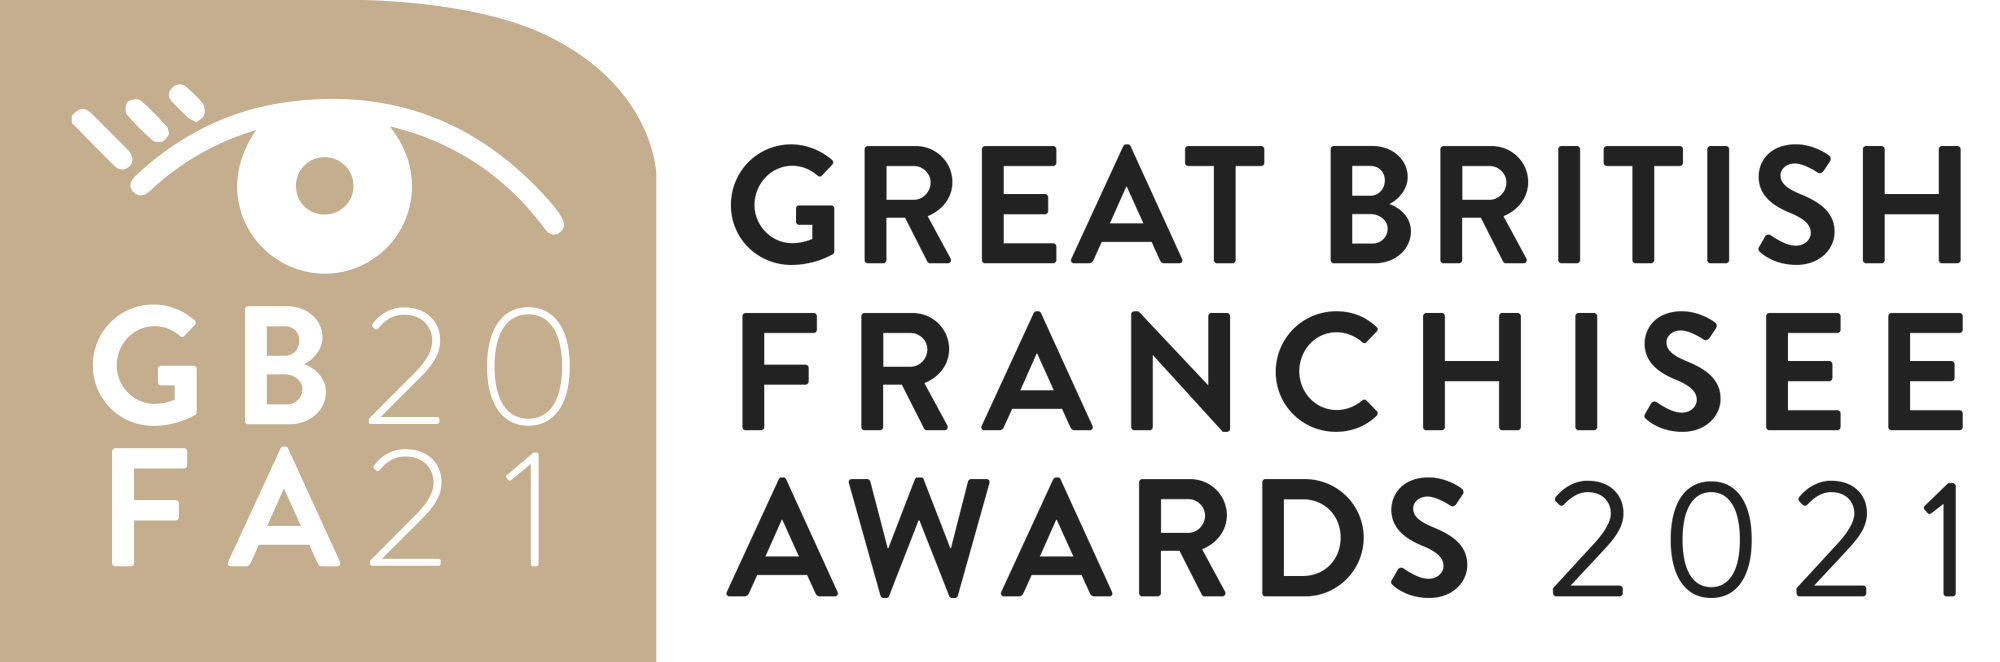 great british franchisee award logo